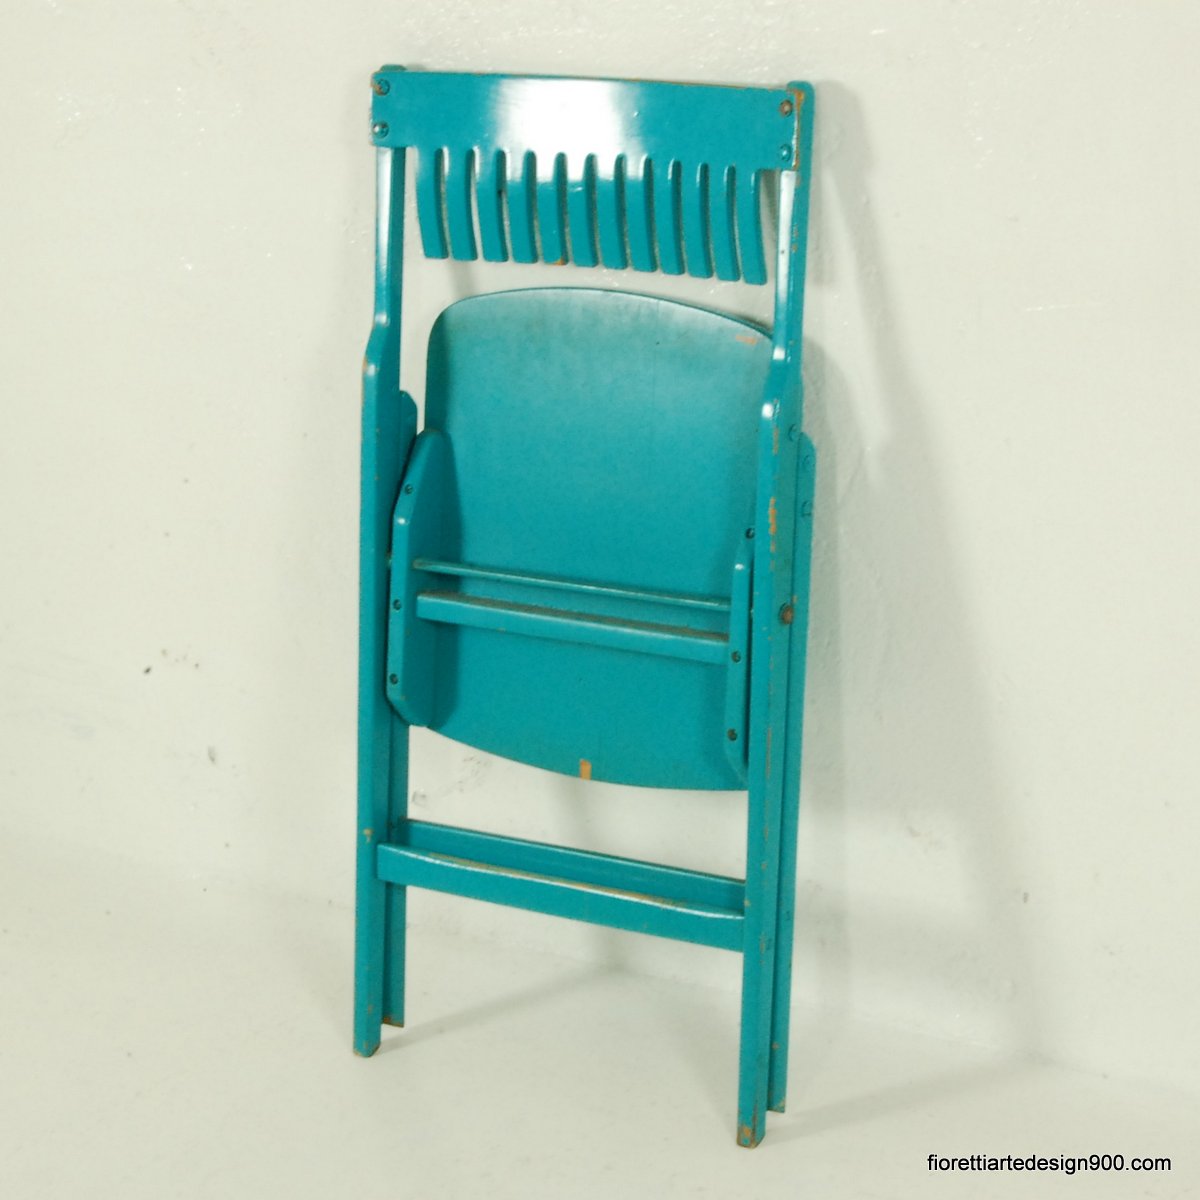 sedia pieghevole design Niko Krali Selettiva Cantù 1957 Kralj folding chair